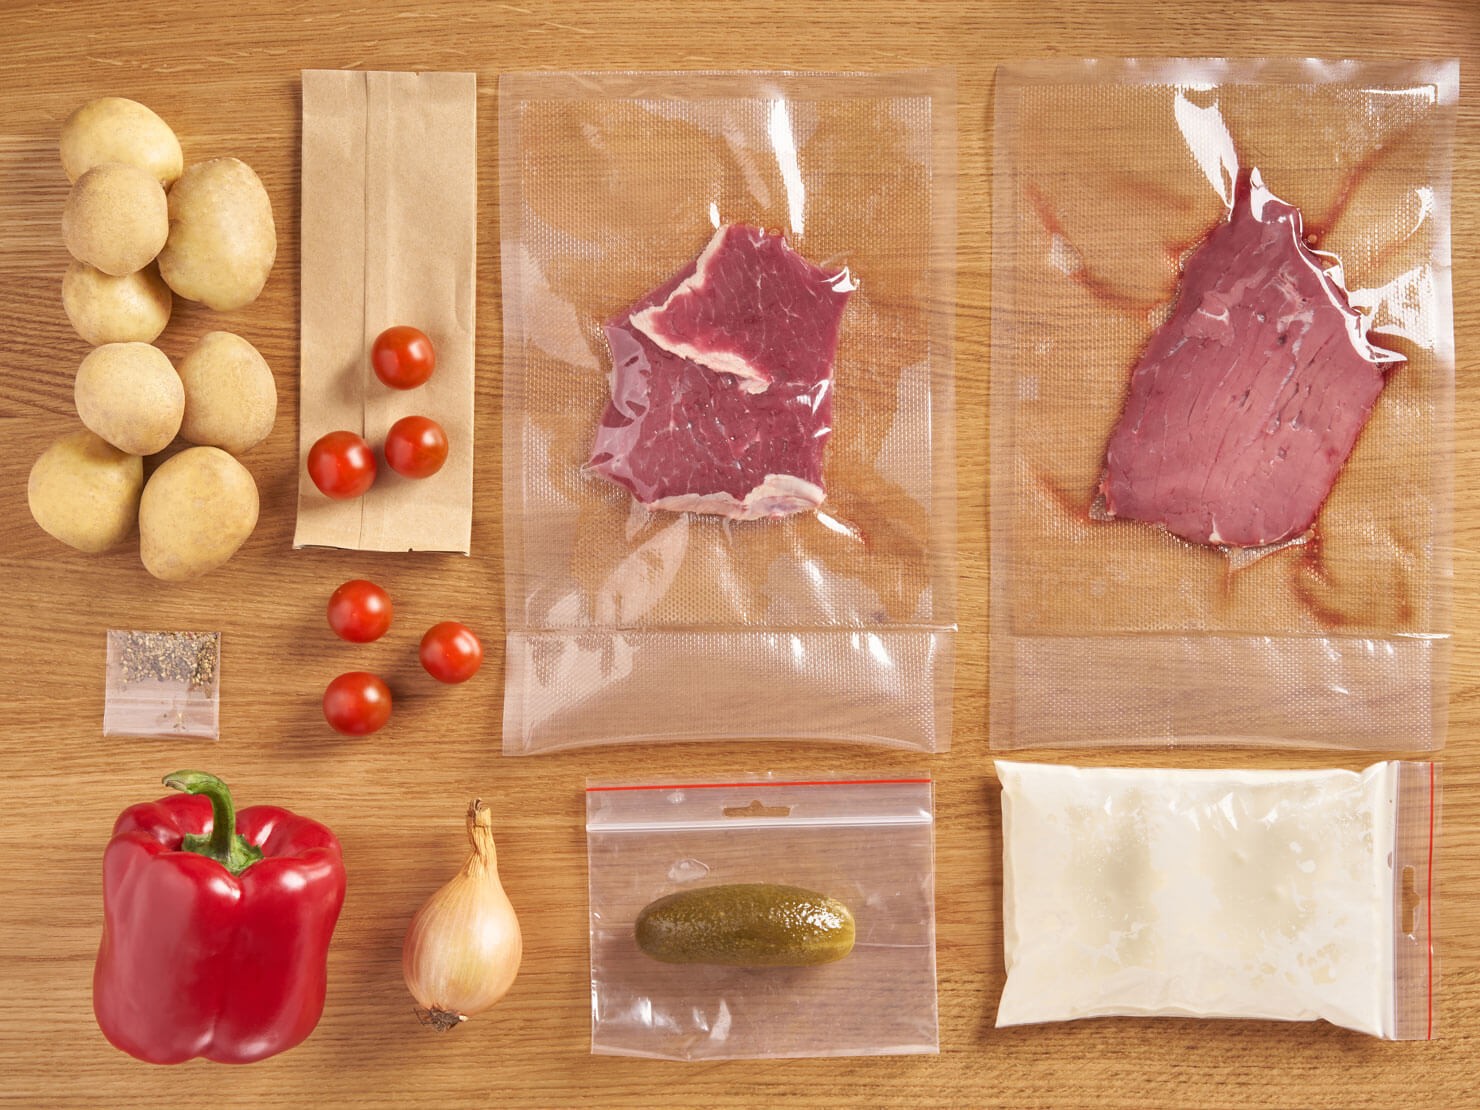 Gourmet At-Home Meal Kits